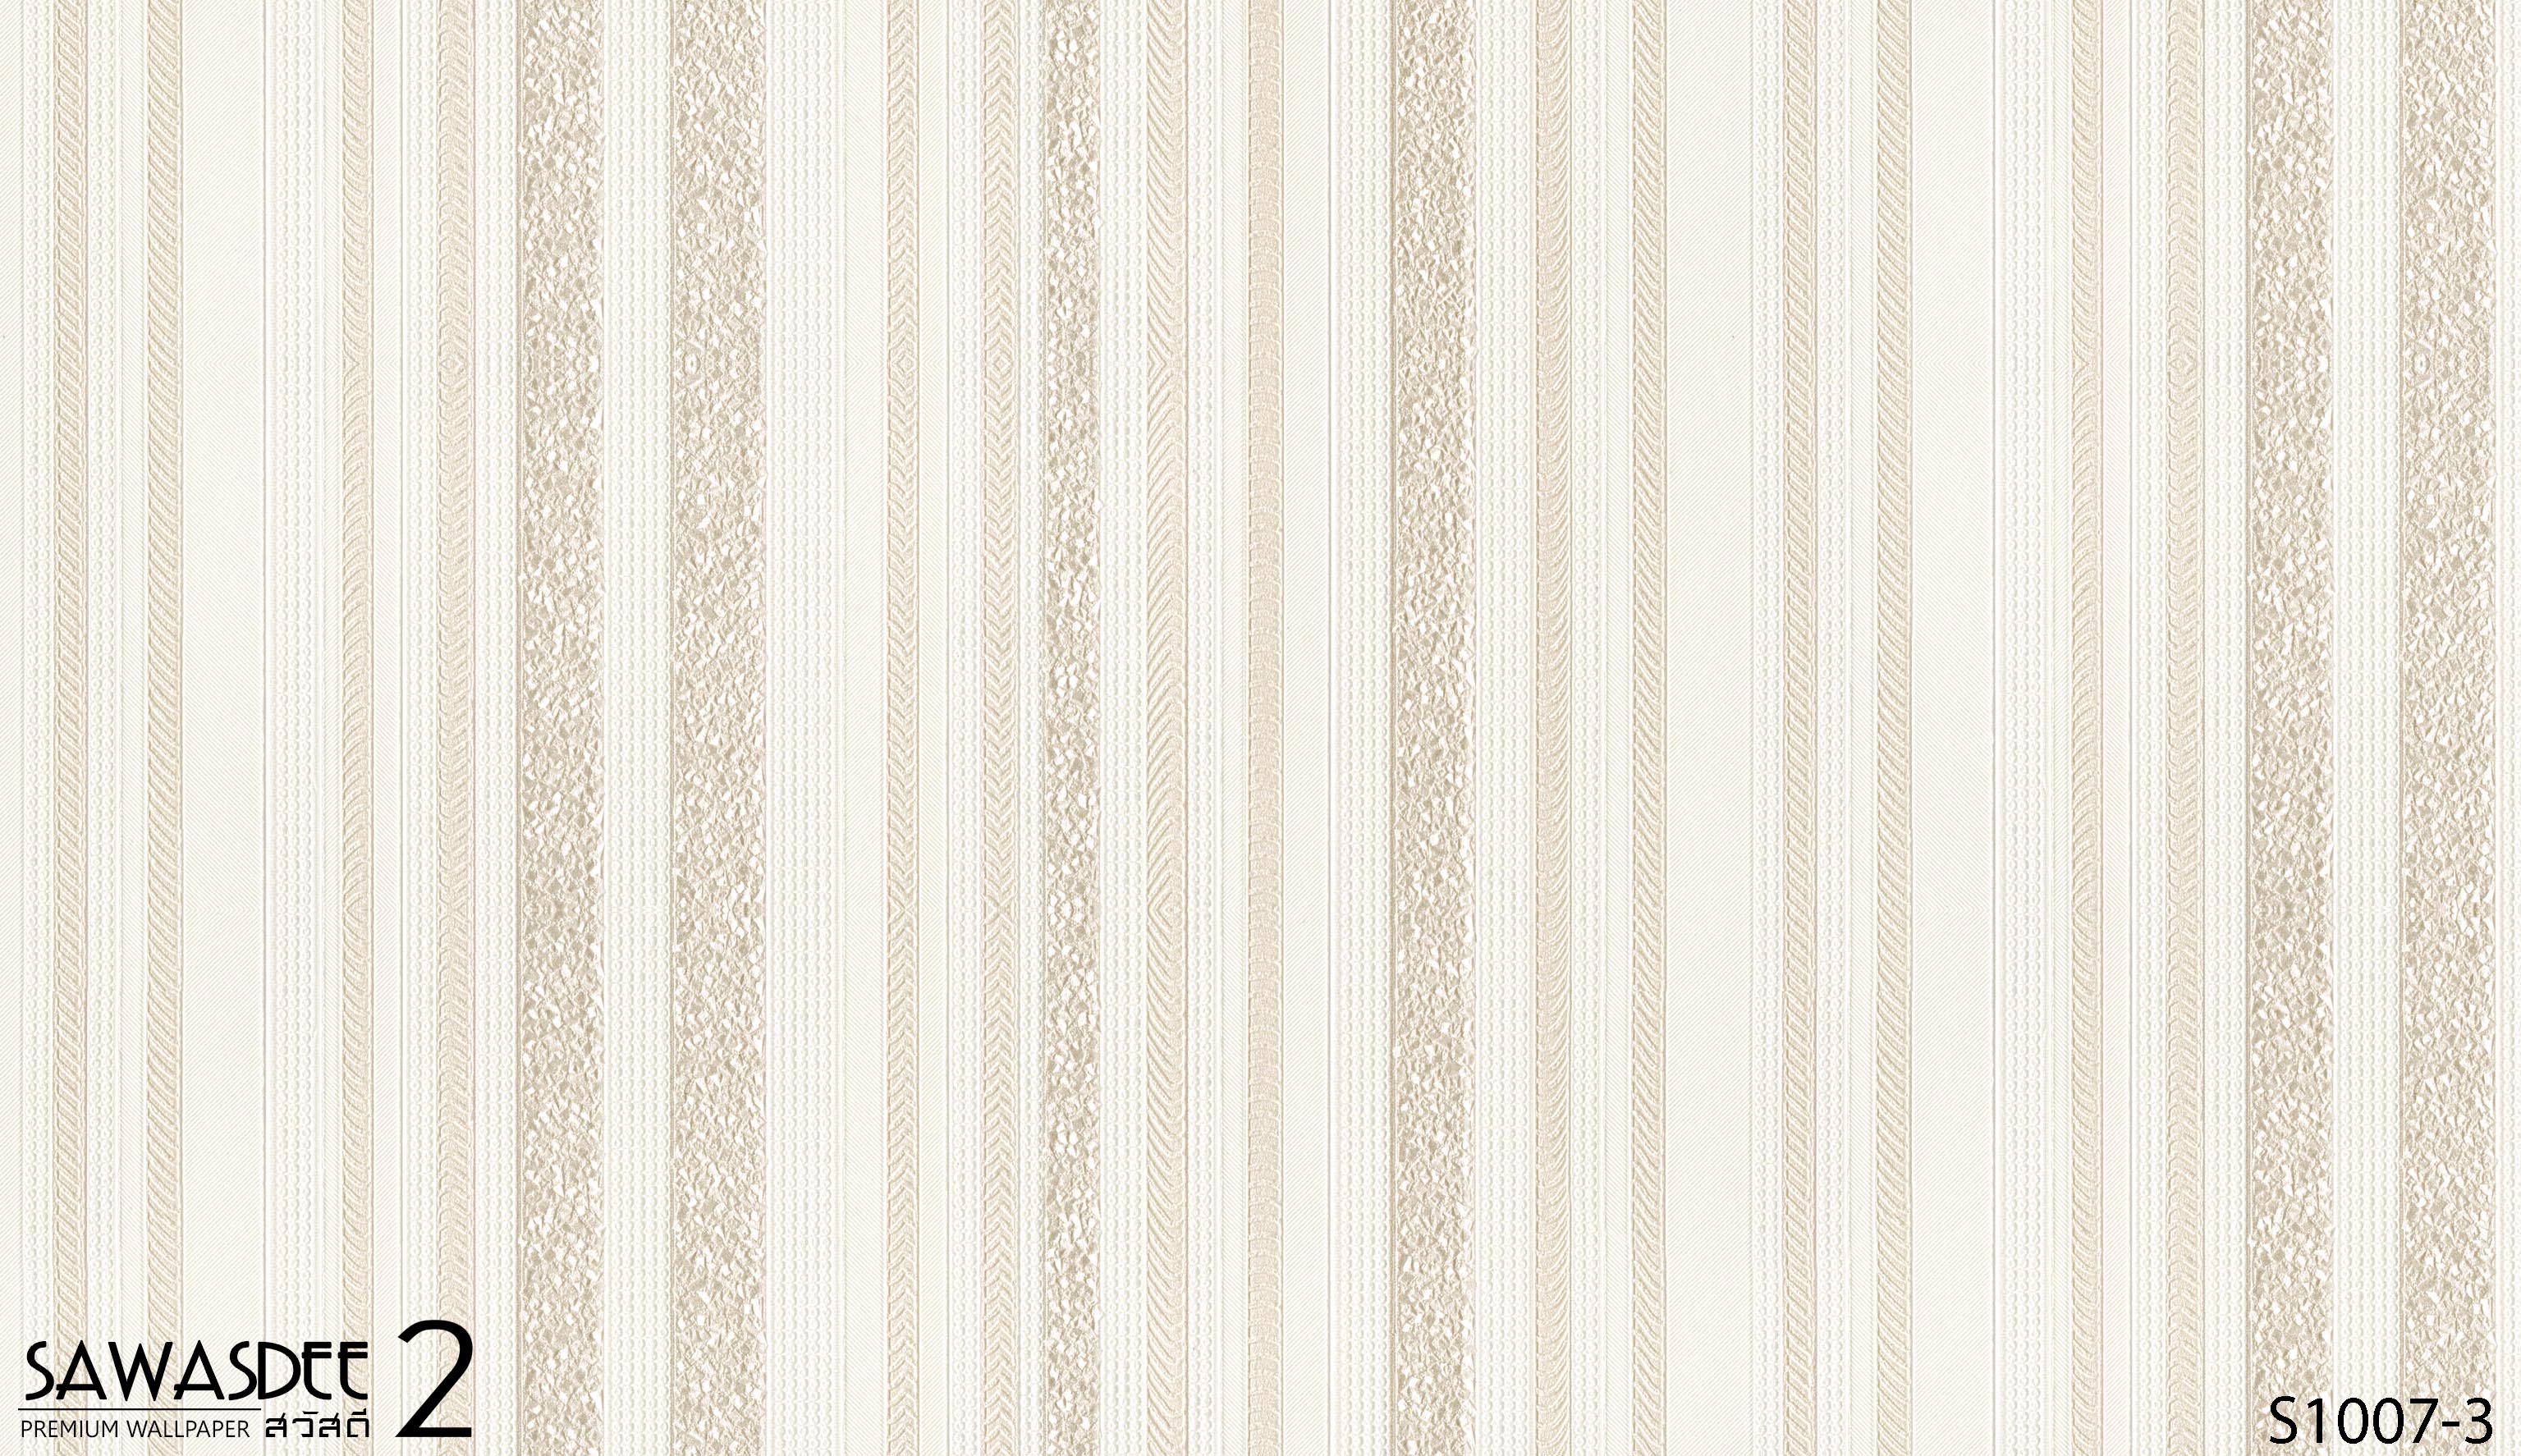 Wallpaper (SAWASDEE 2) S1007-3